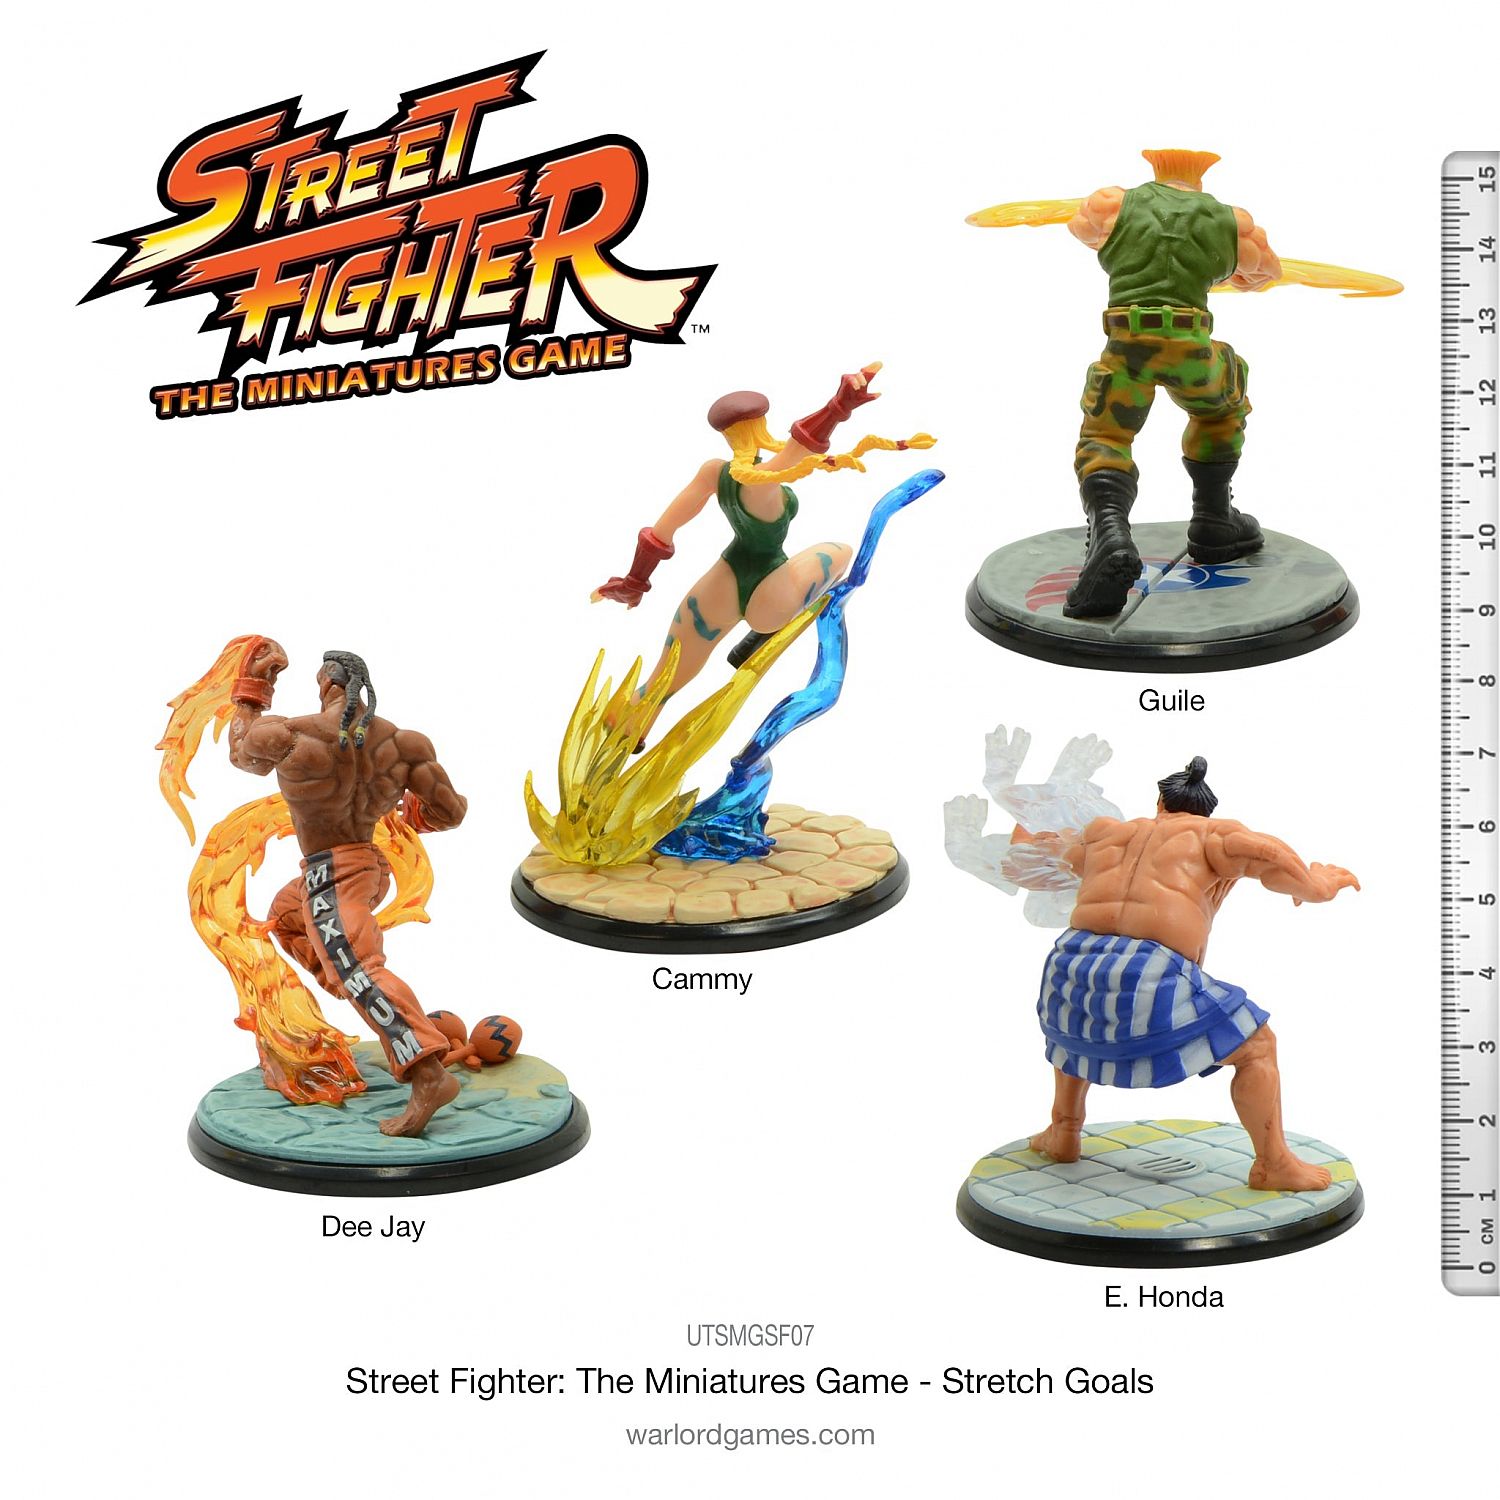 Games - Toy Cabal Customs x Mooch - Street Fighter Blanka #140